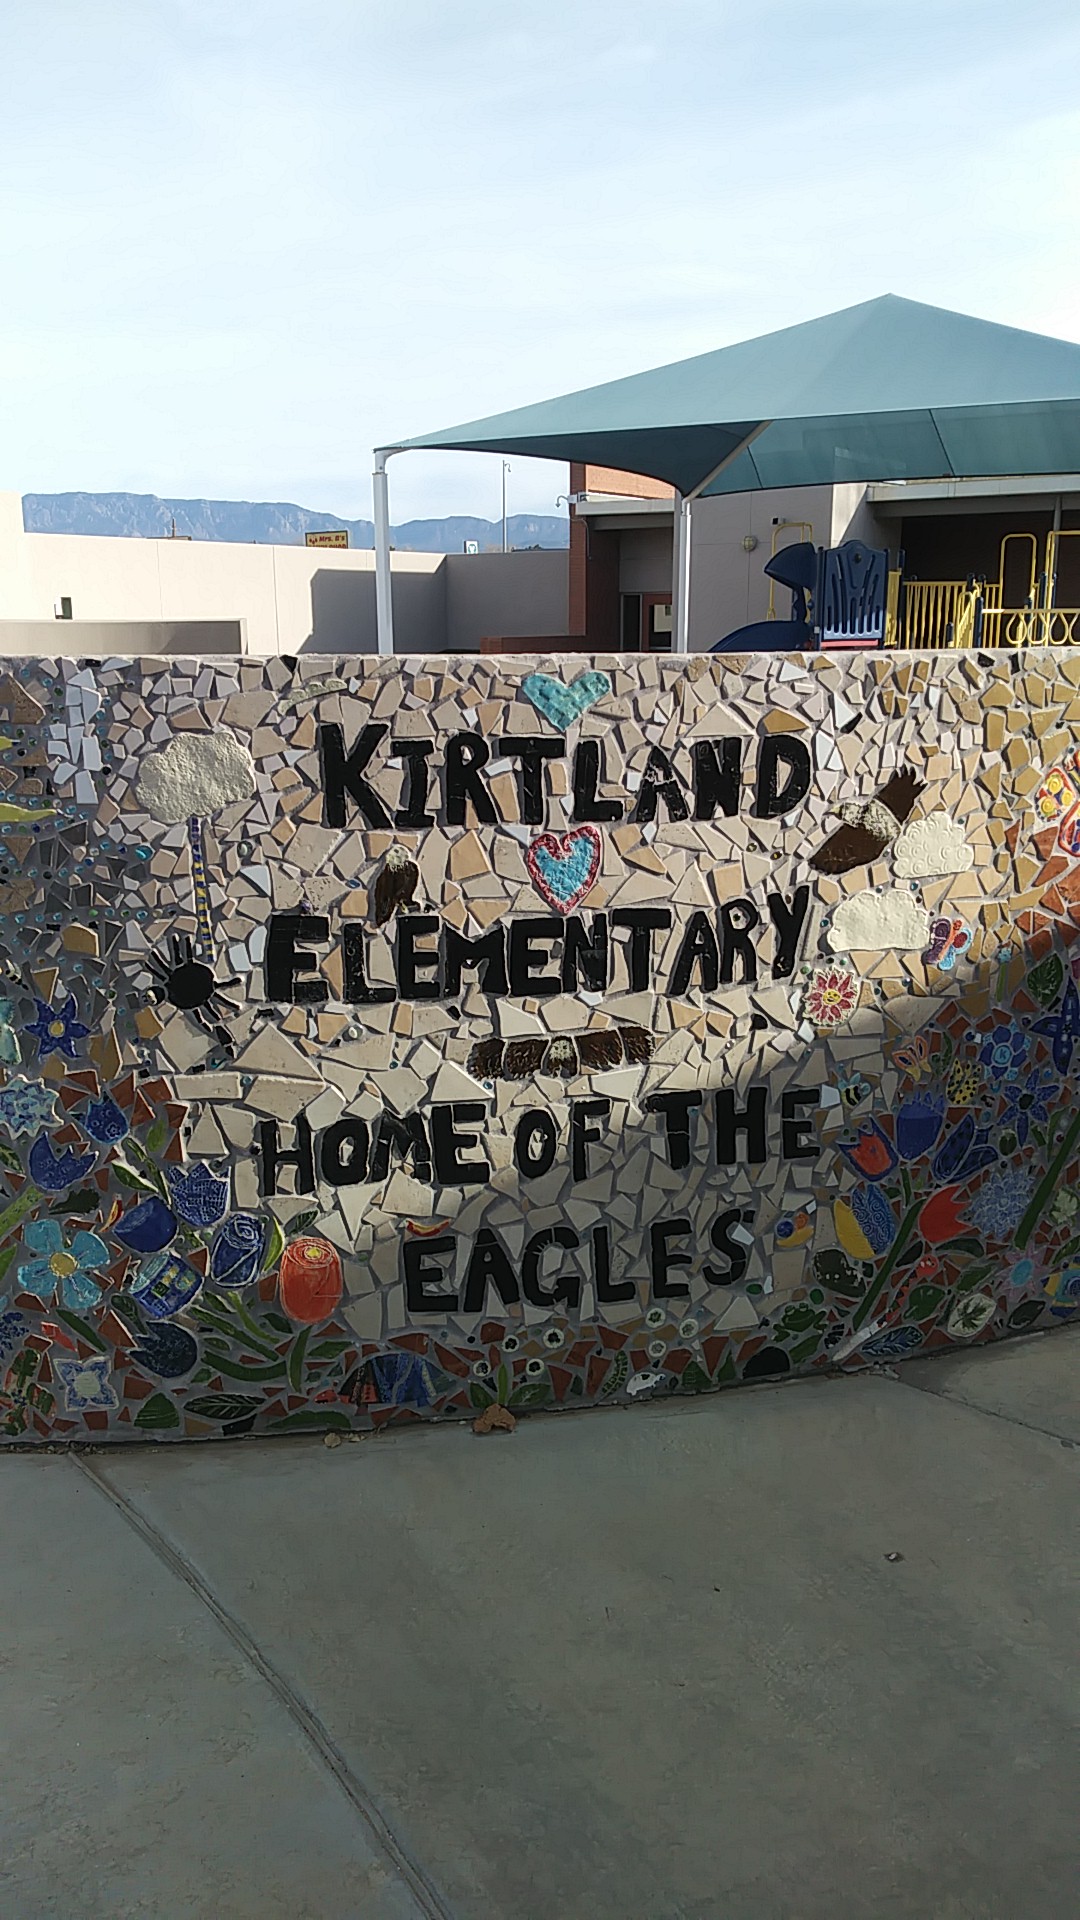 Kirtland Elementary School